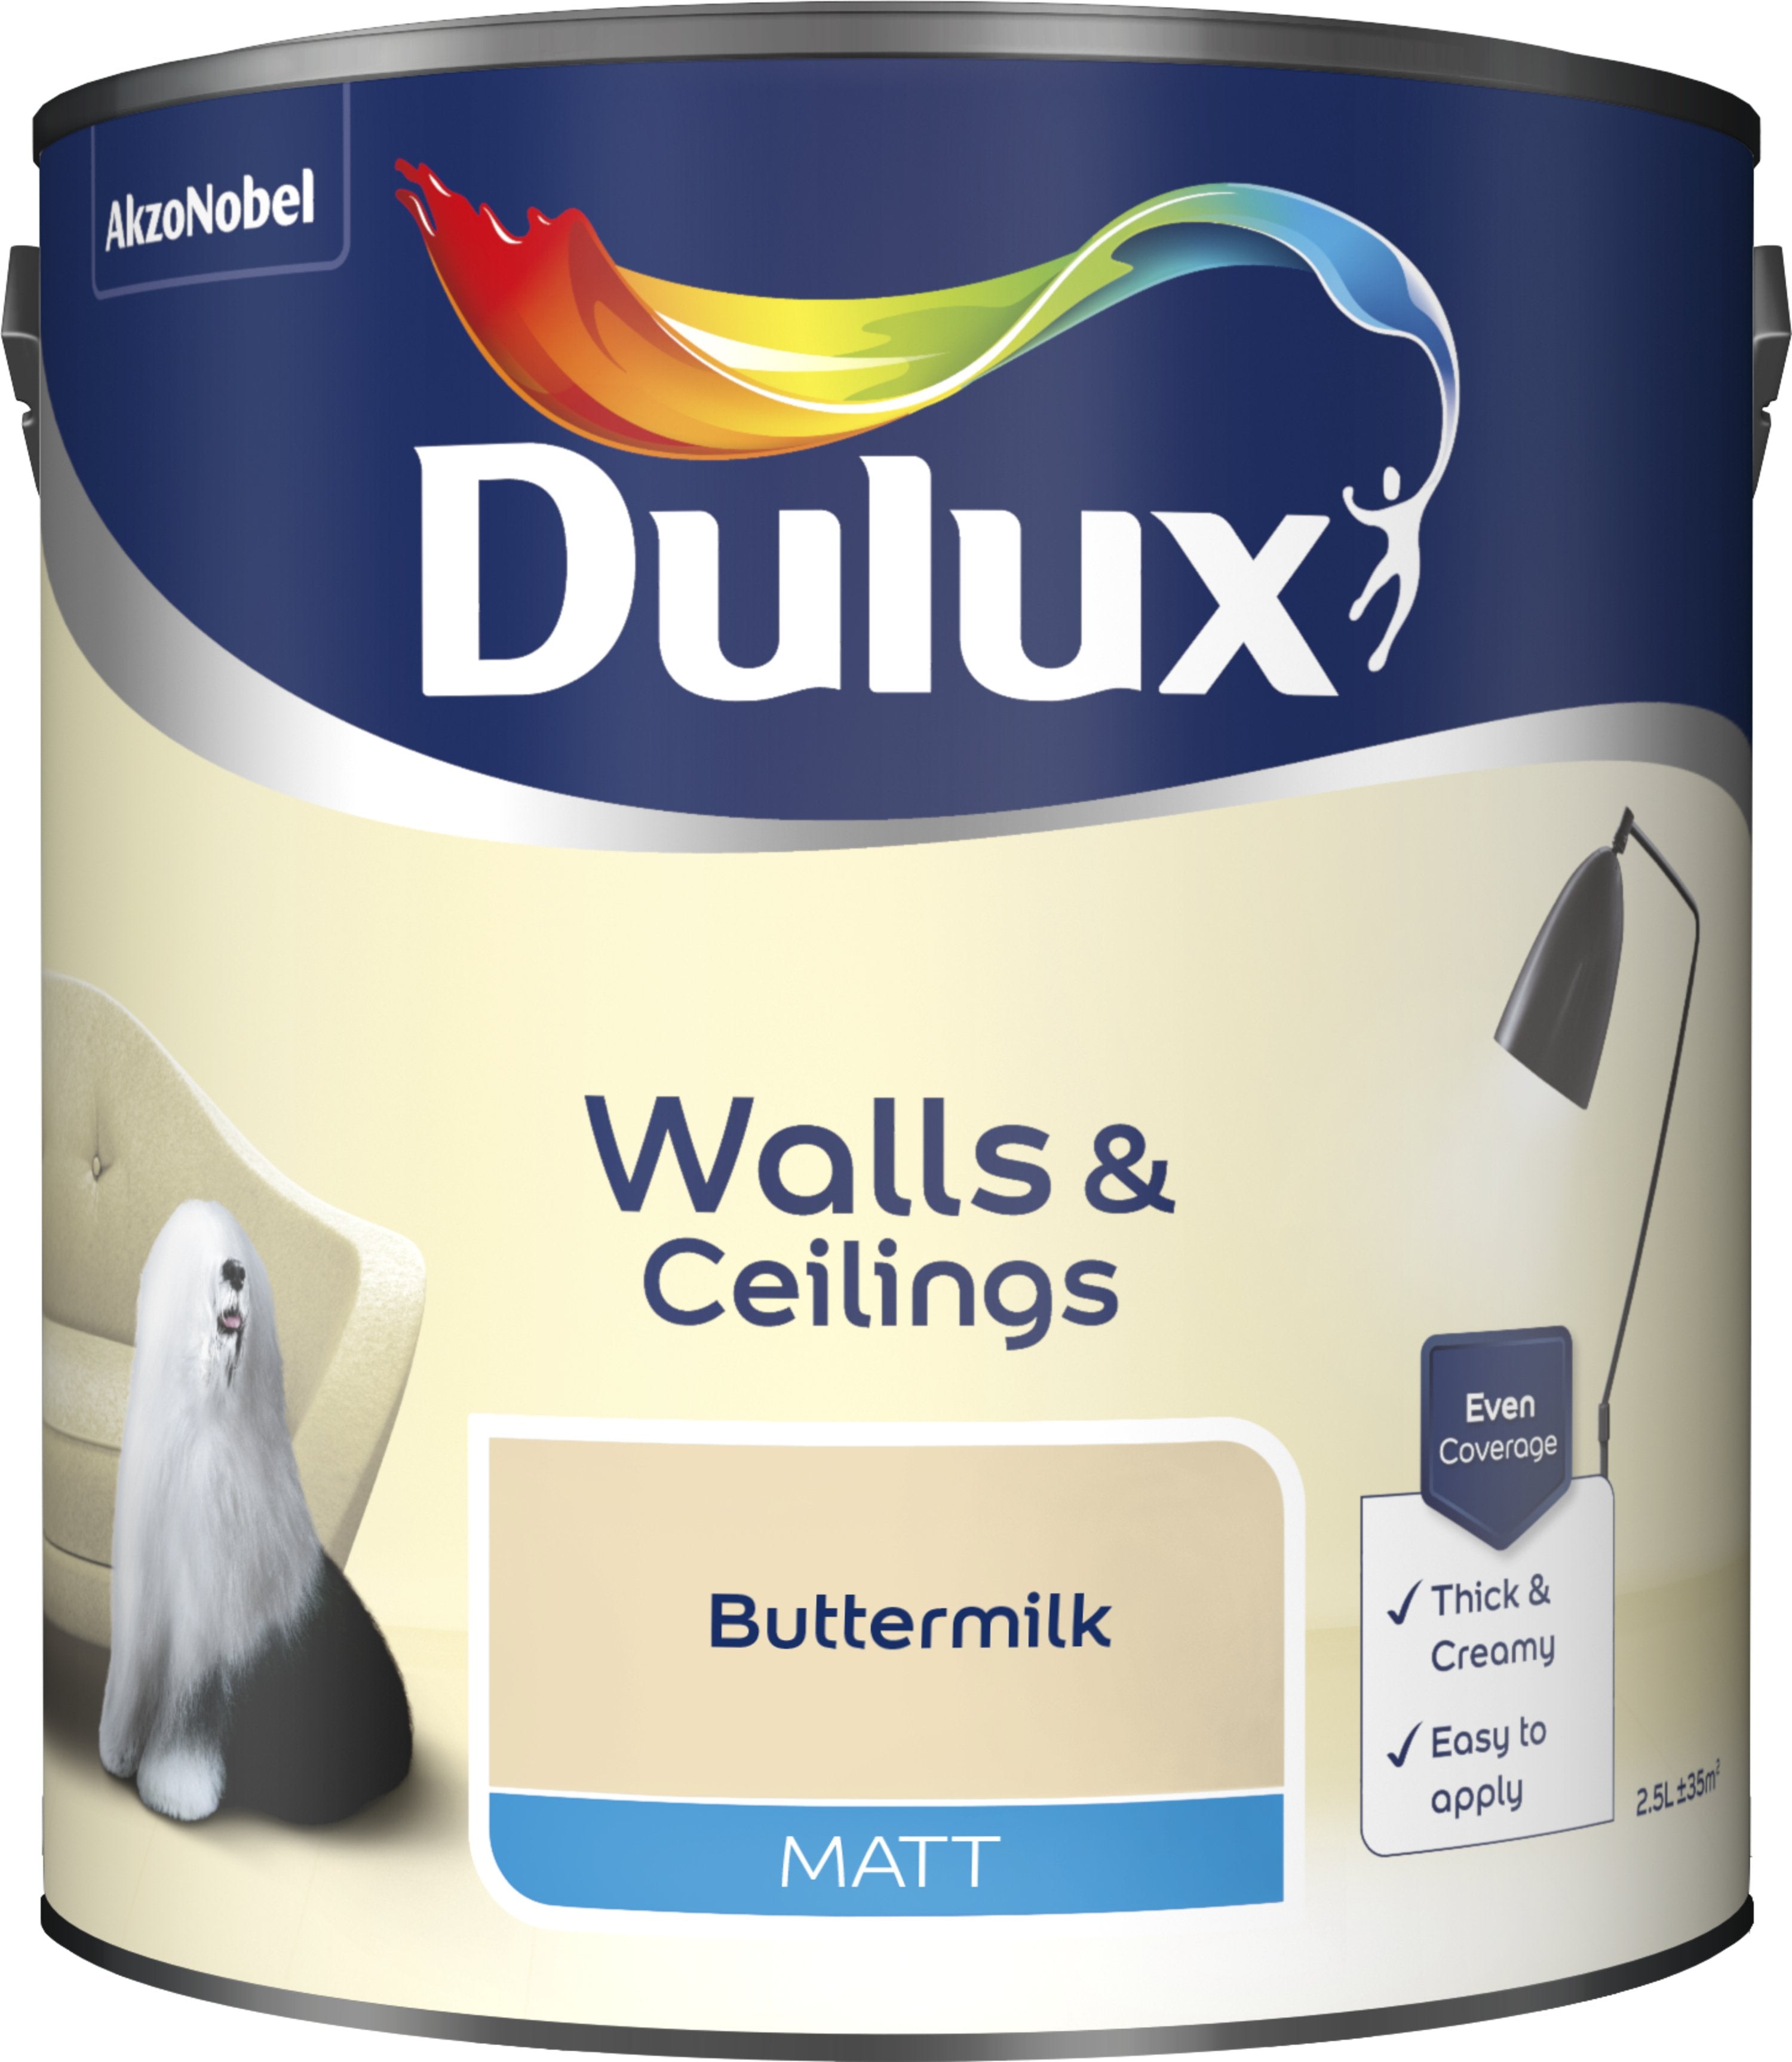 Dulux Matt Emulsion Paint For Walls And Ceilings - Buttermilk 2.5L Garden & Diy  Home Improvements  